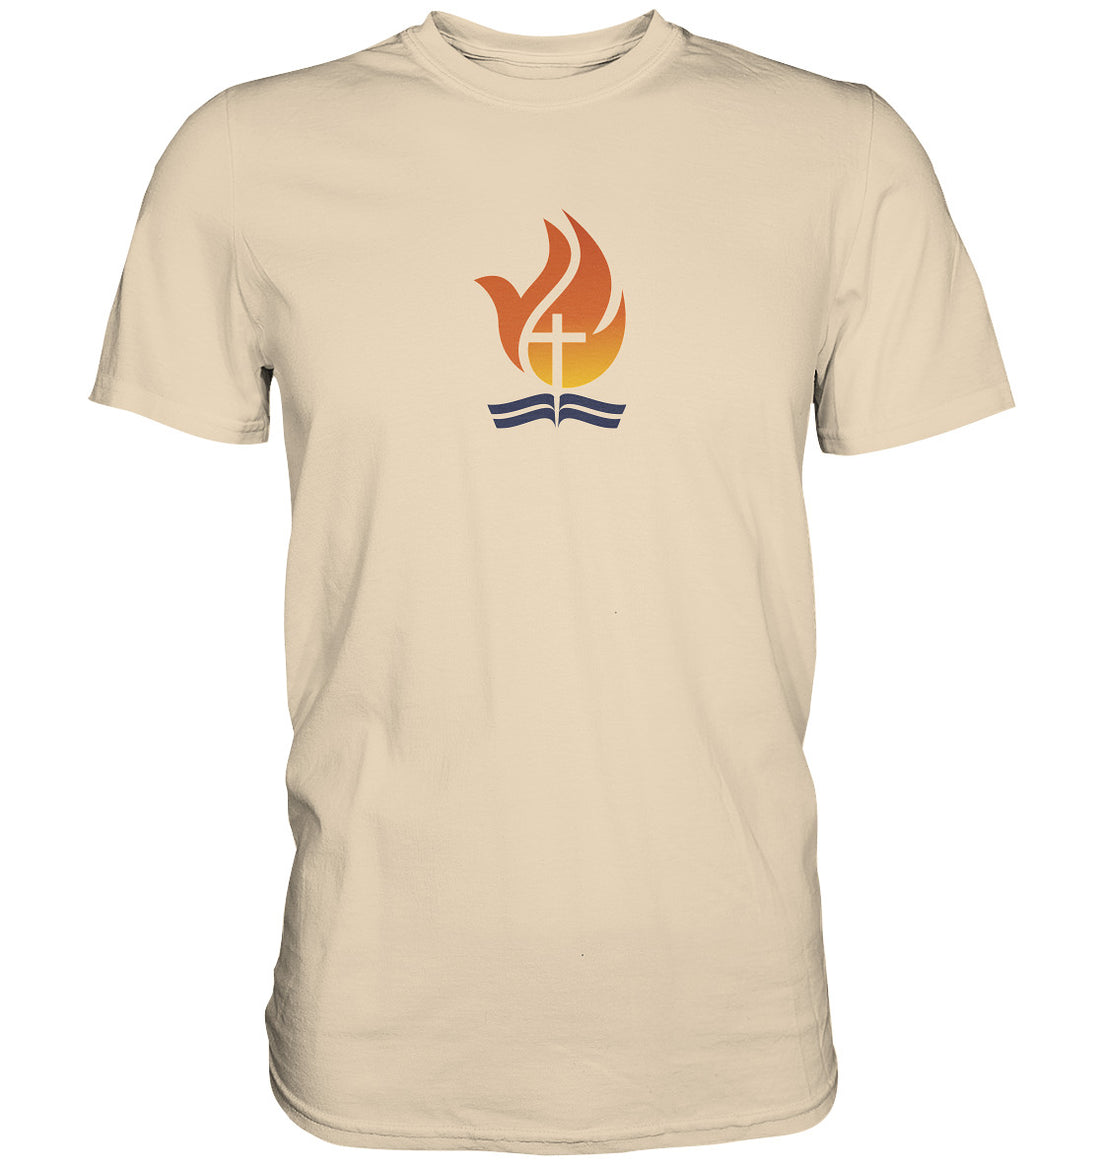 Bible Power Flame Logo - Premium Shirt